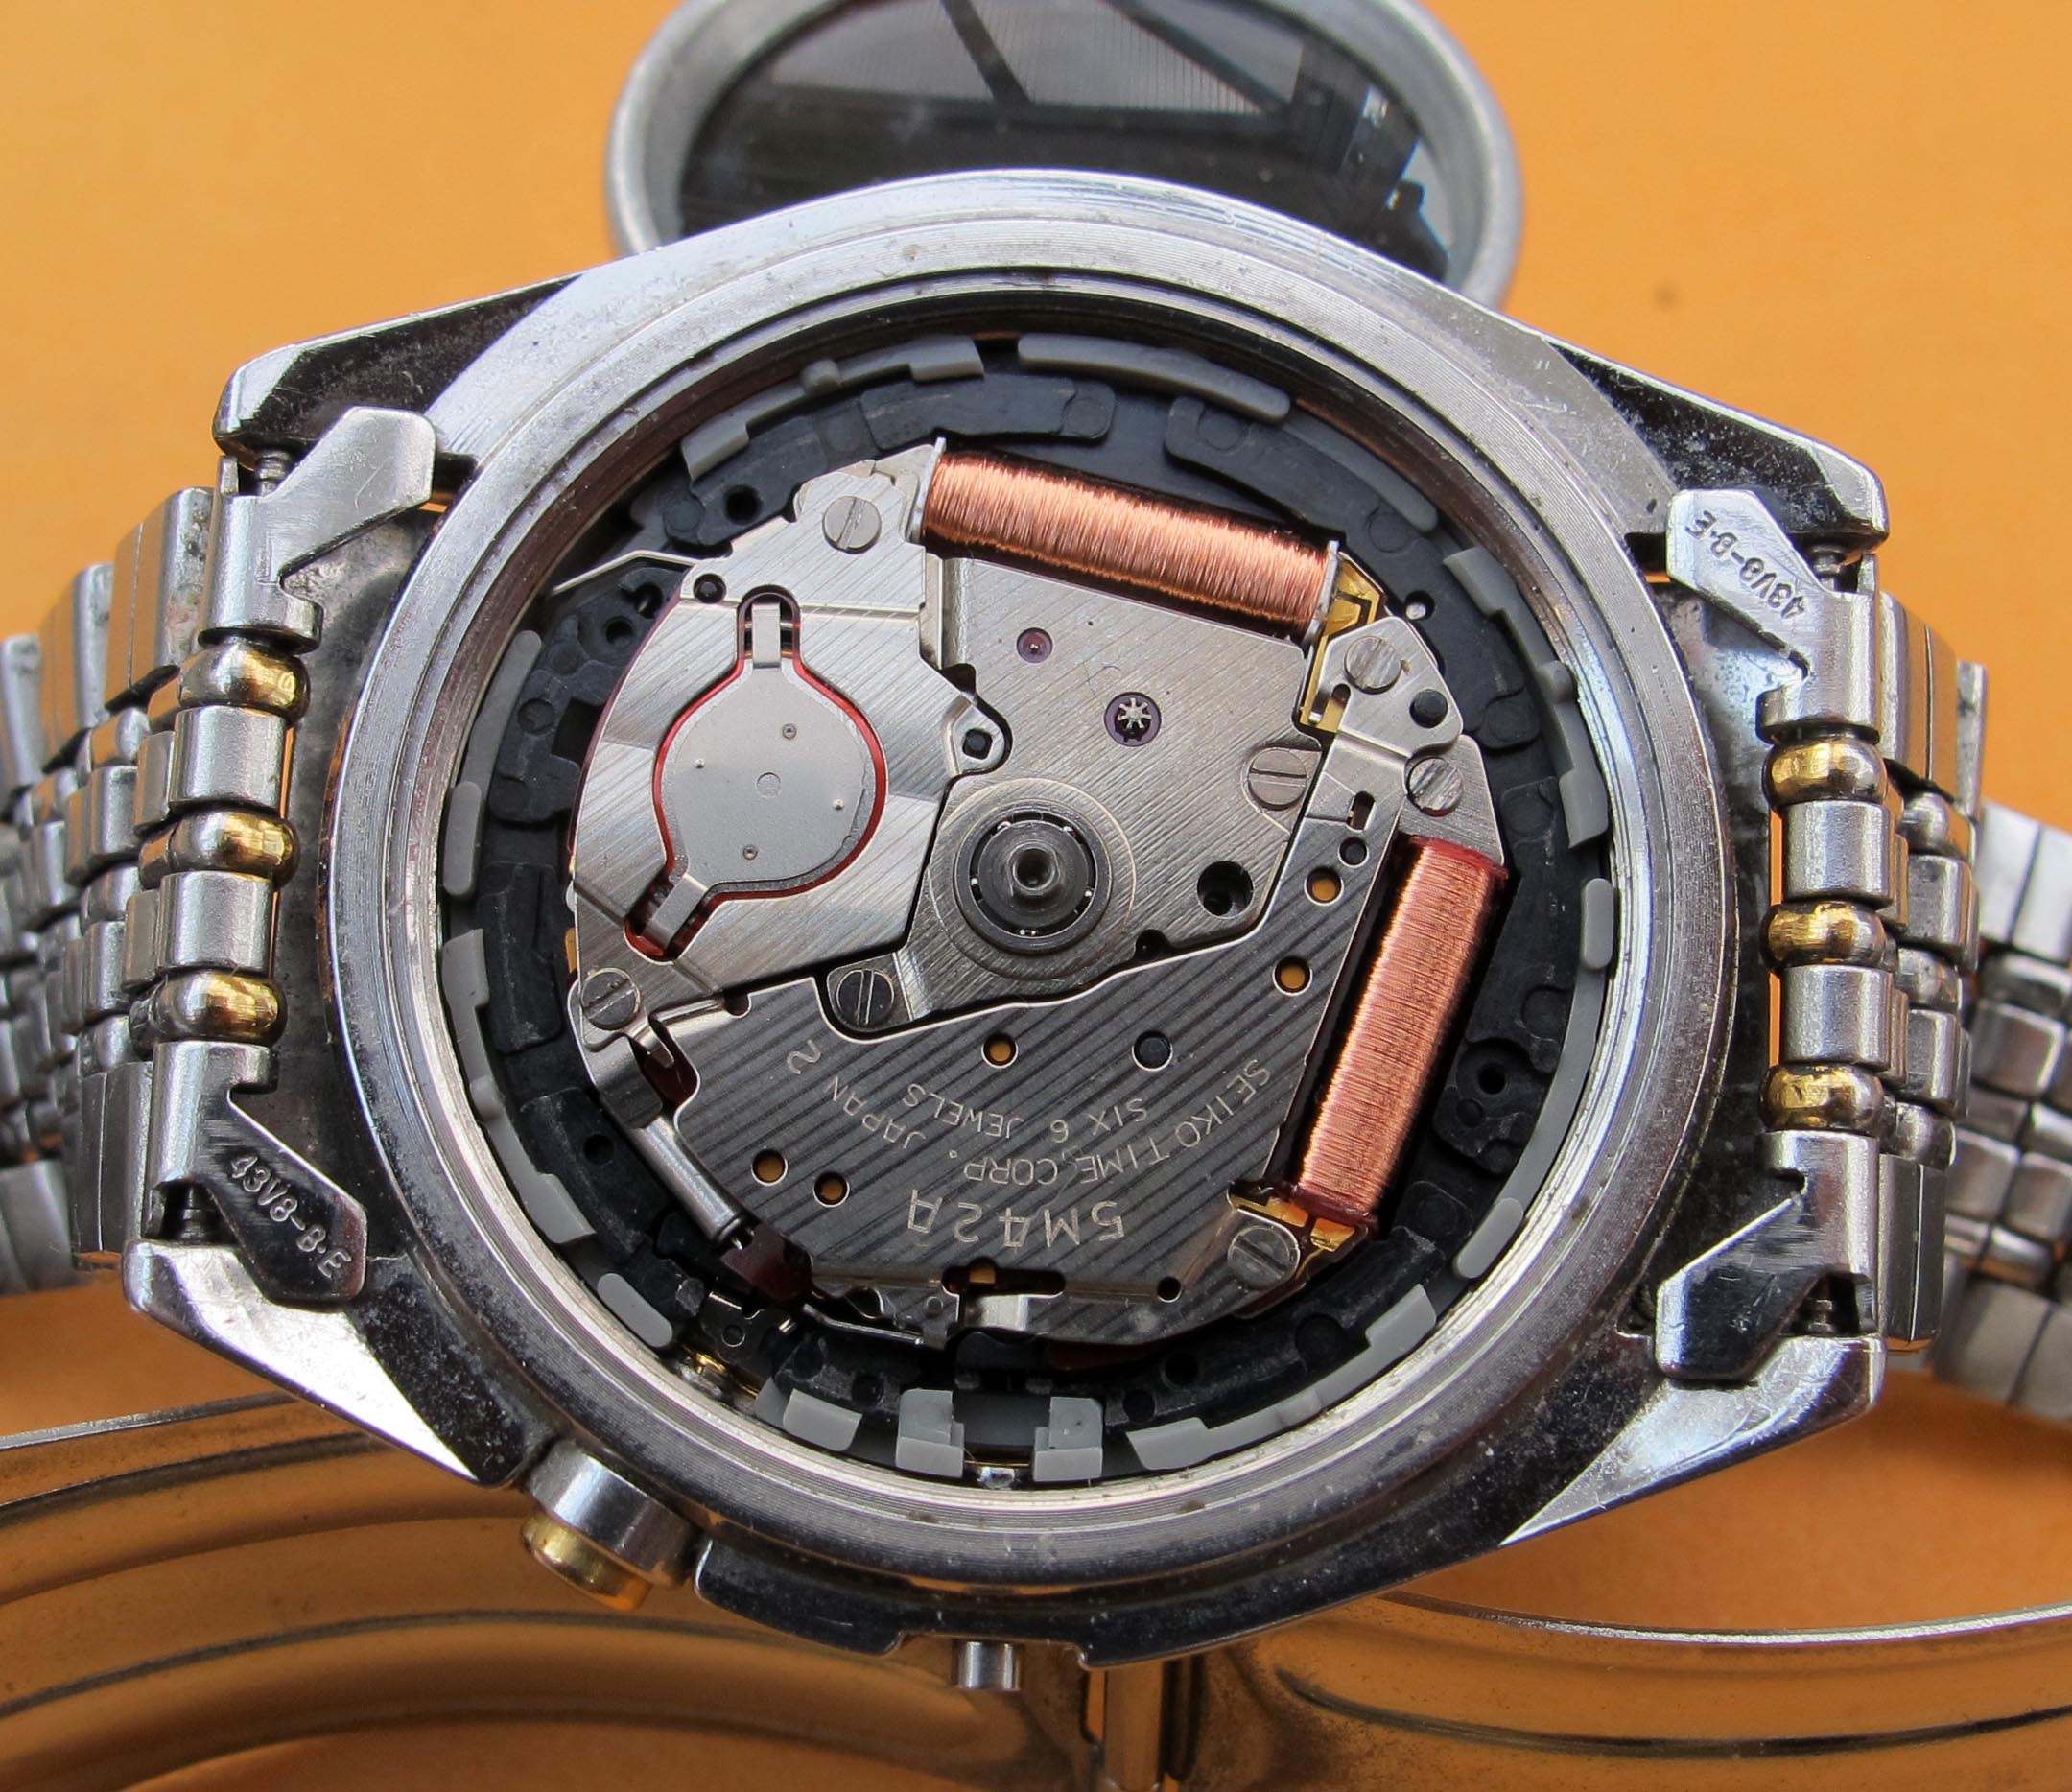 Removal of 5M42 - Watch Repairs Help & Advice - Watch Repair Talk